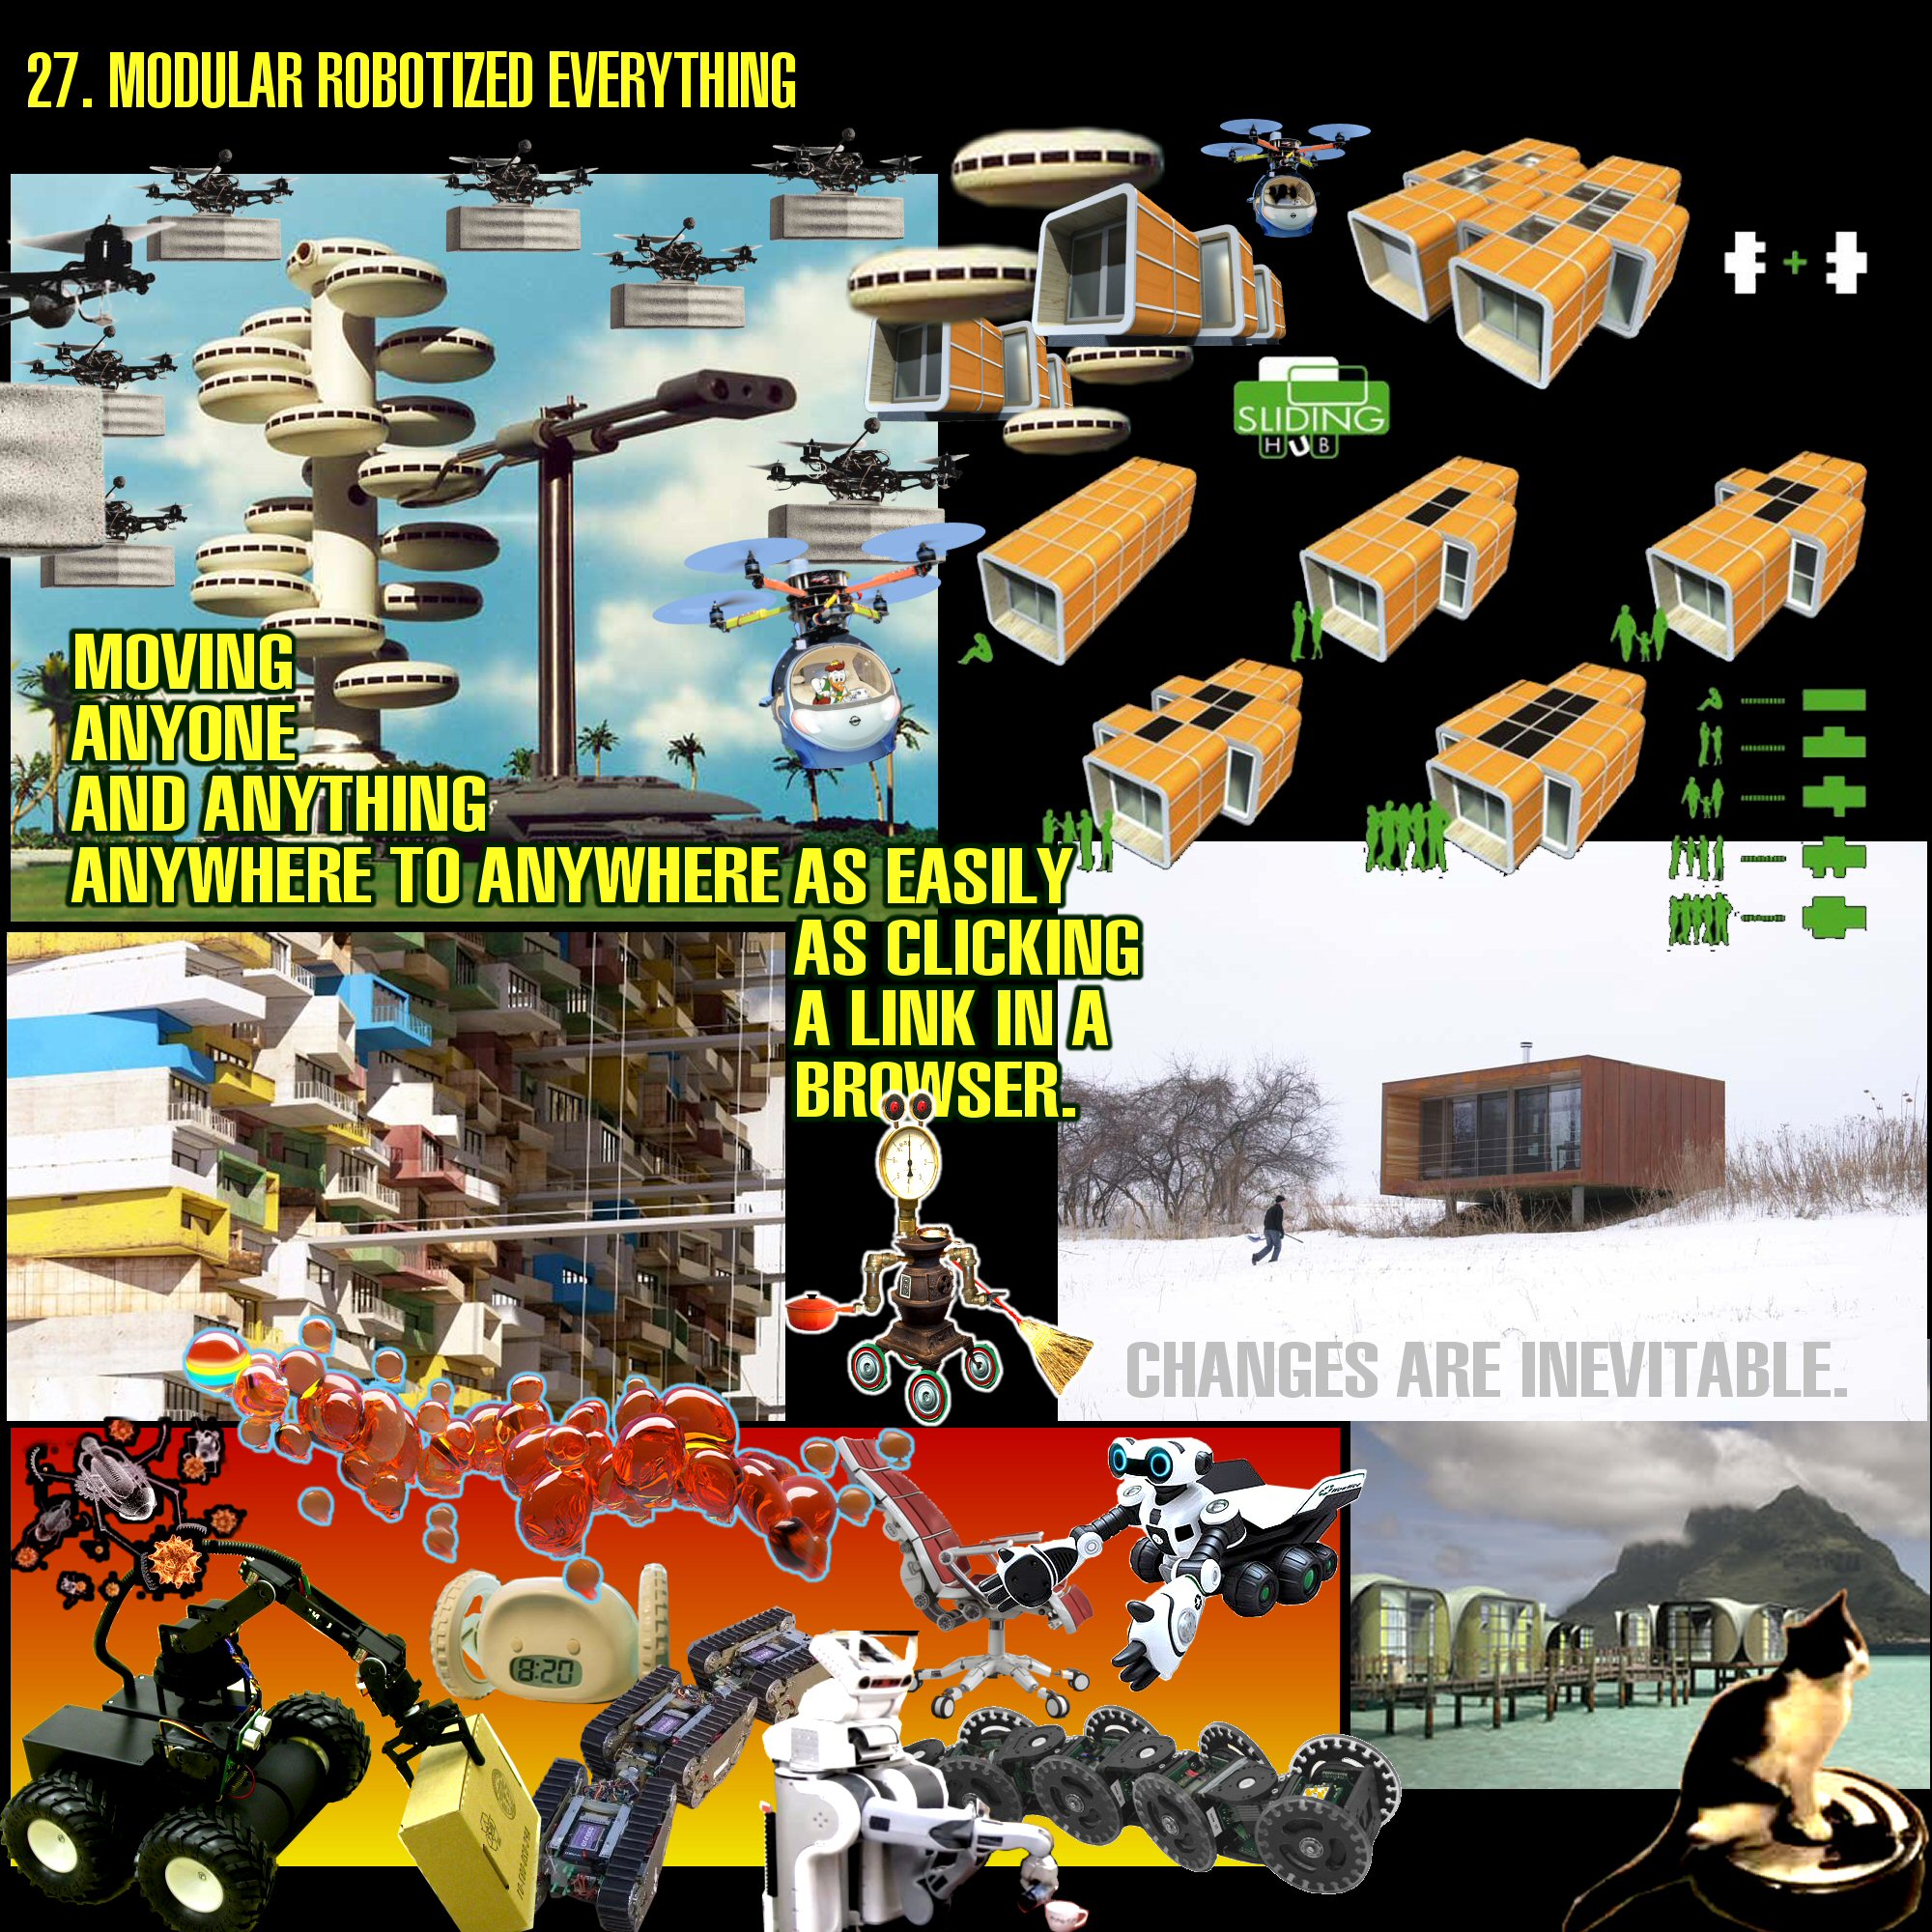 27 Modular Robotized Everything